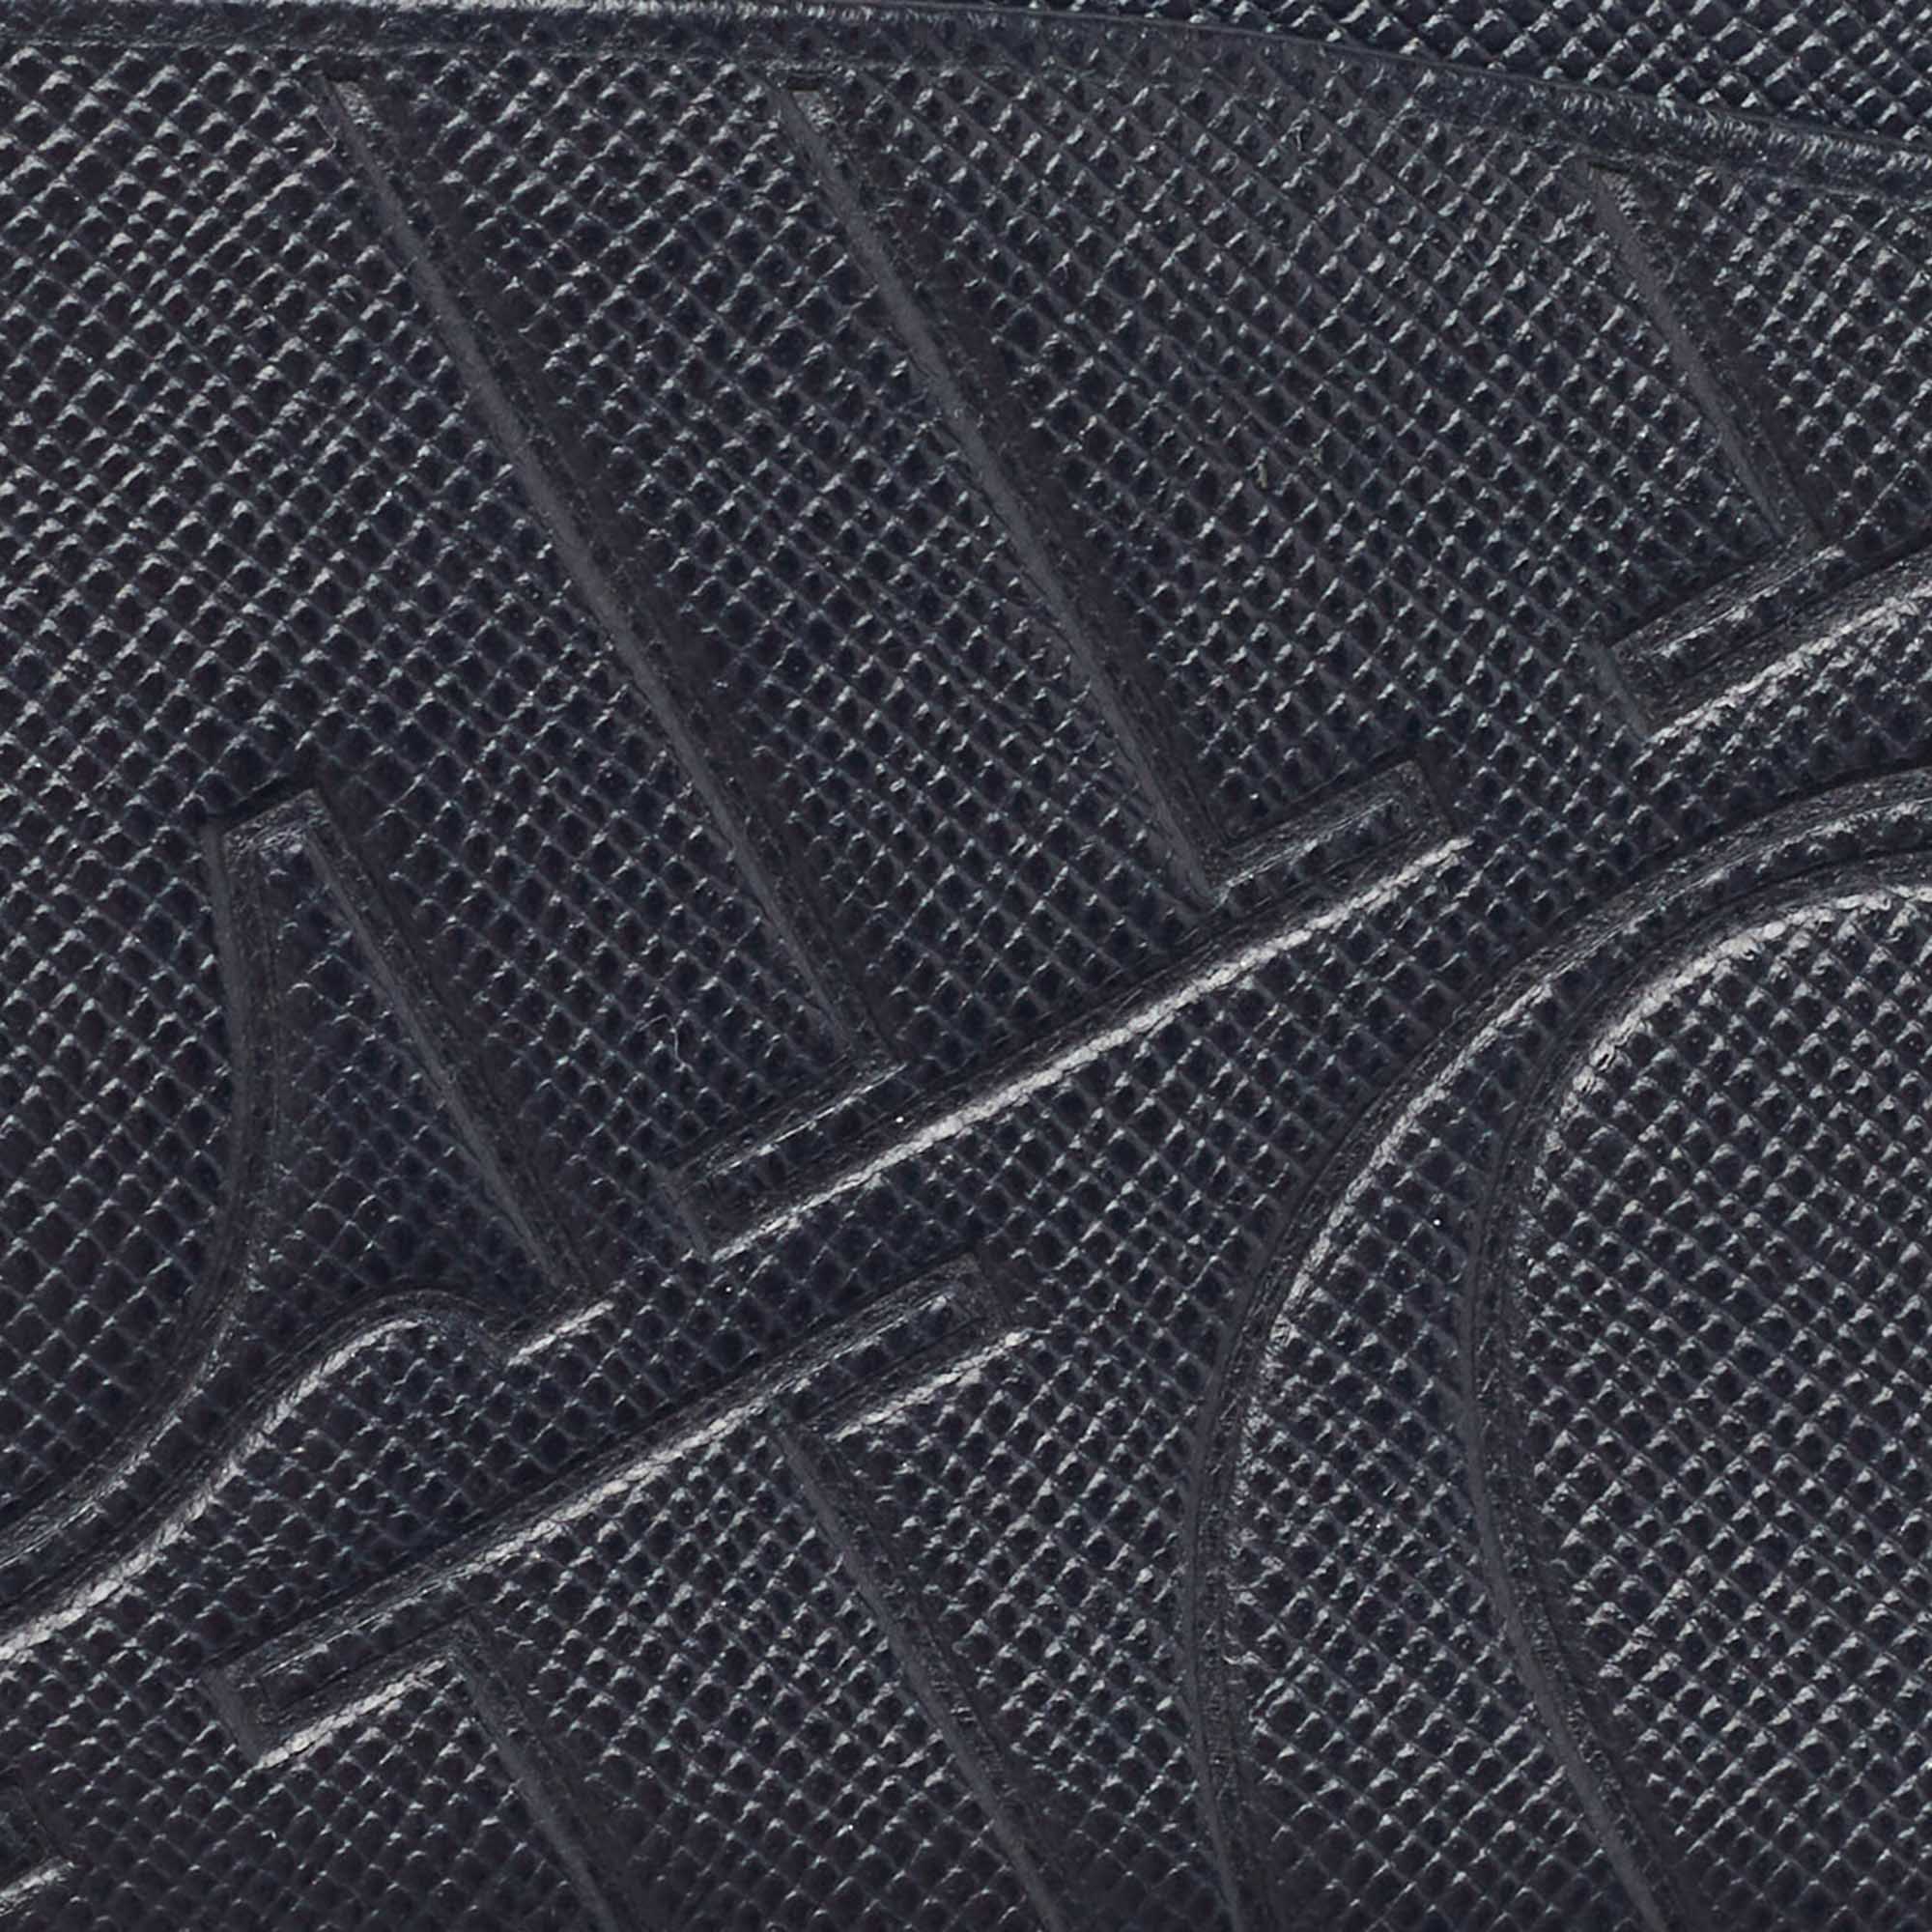 CH Carolina Herrera Dark Blue Monogram Embossed Leather Card Holder